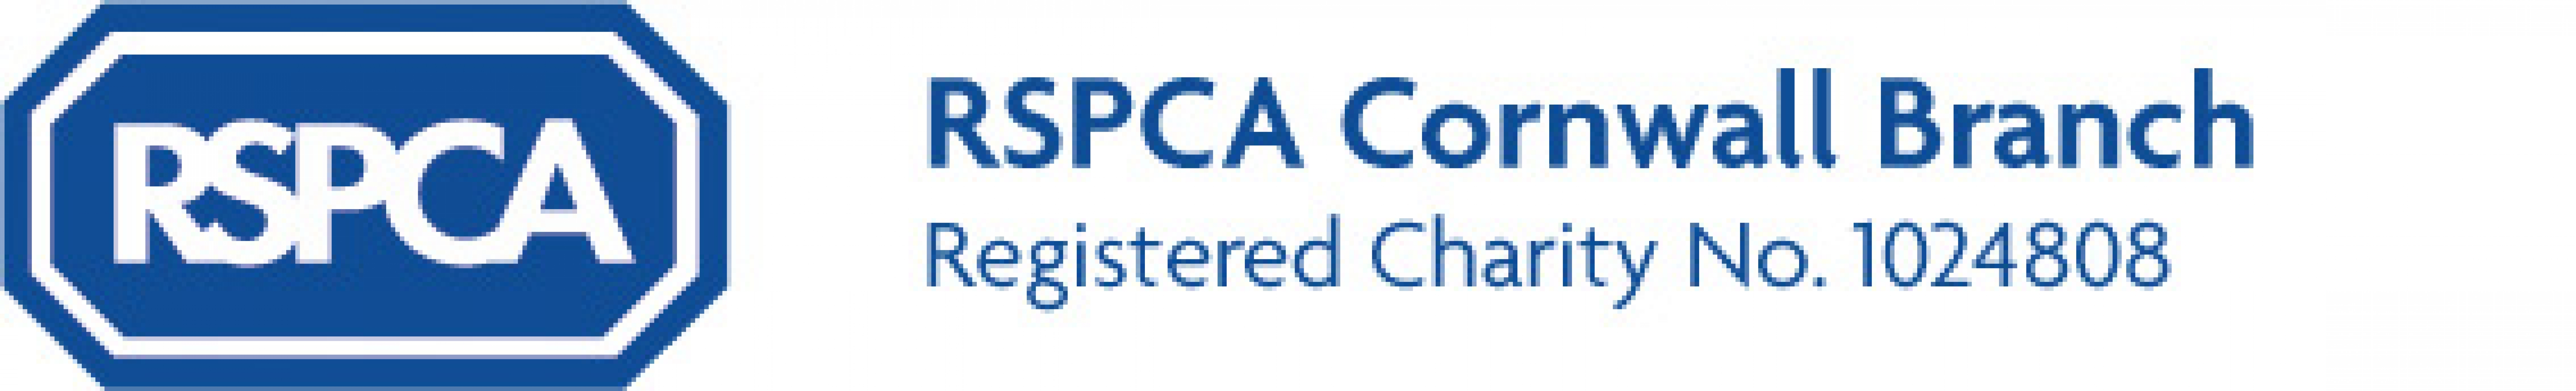 RSPCA Cornwall Branch eCards